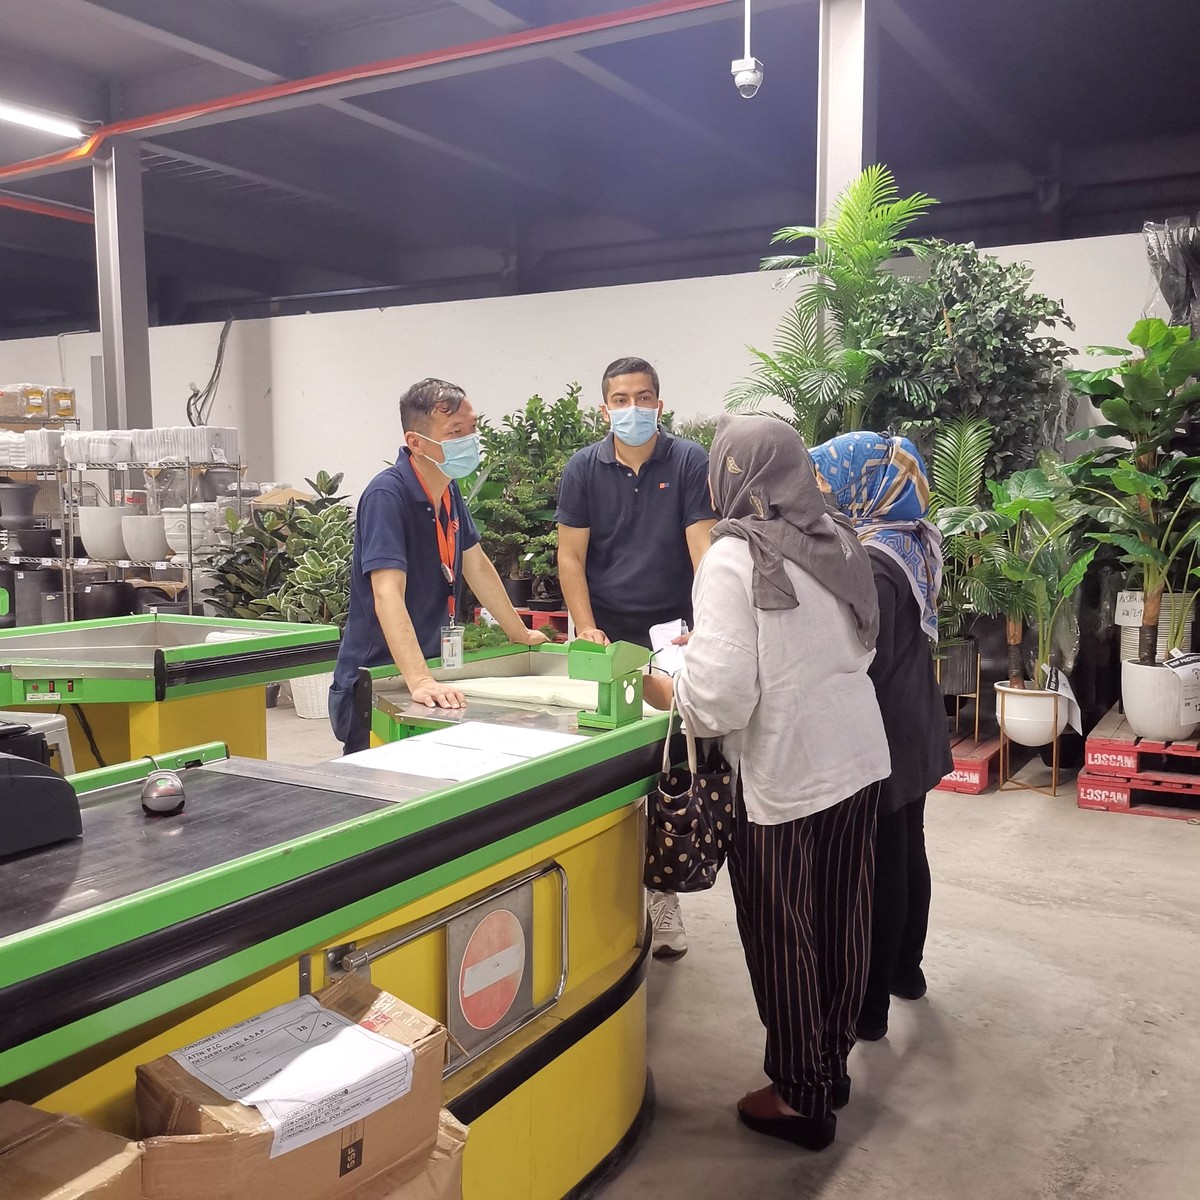 SSF-Warehouse-Sale-2021-Malaysia-Glenmarie-Jualan-Gudang-Perabot-Furniture-007 - Furniture Home & Garden & Tools Home Decor Selangor Warehouse Sale & Clearance in Malaysia 